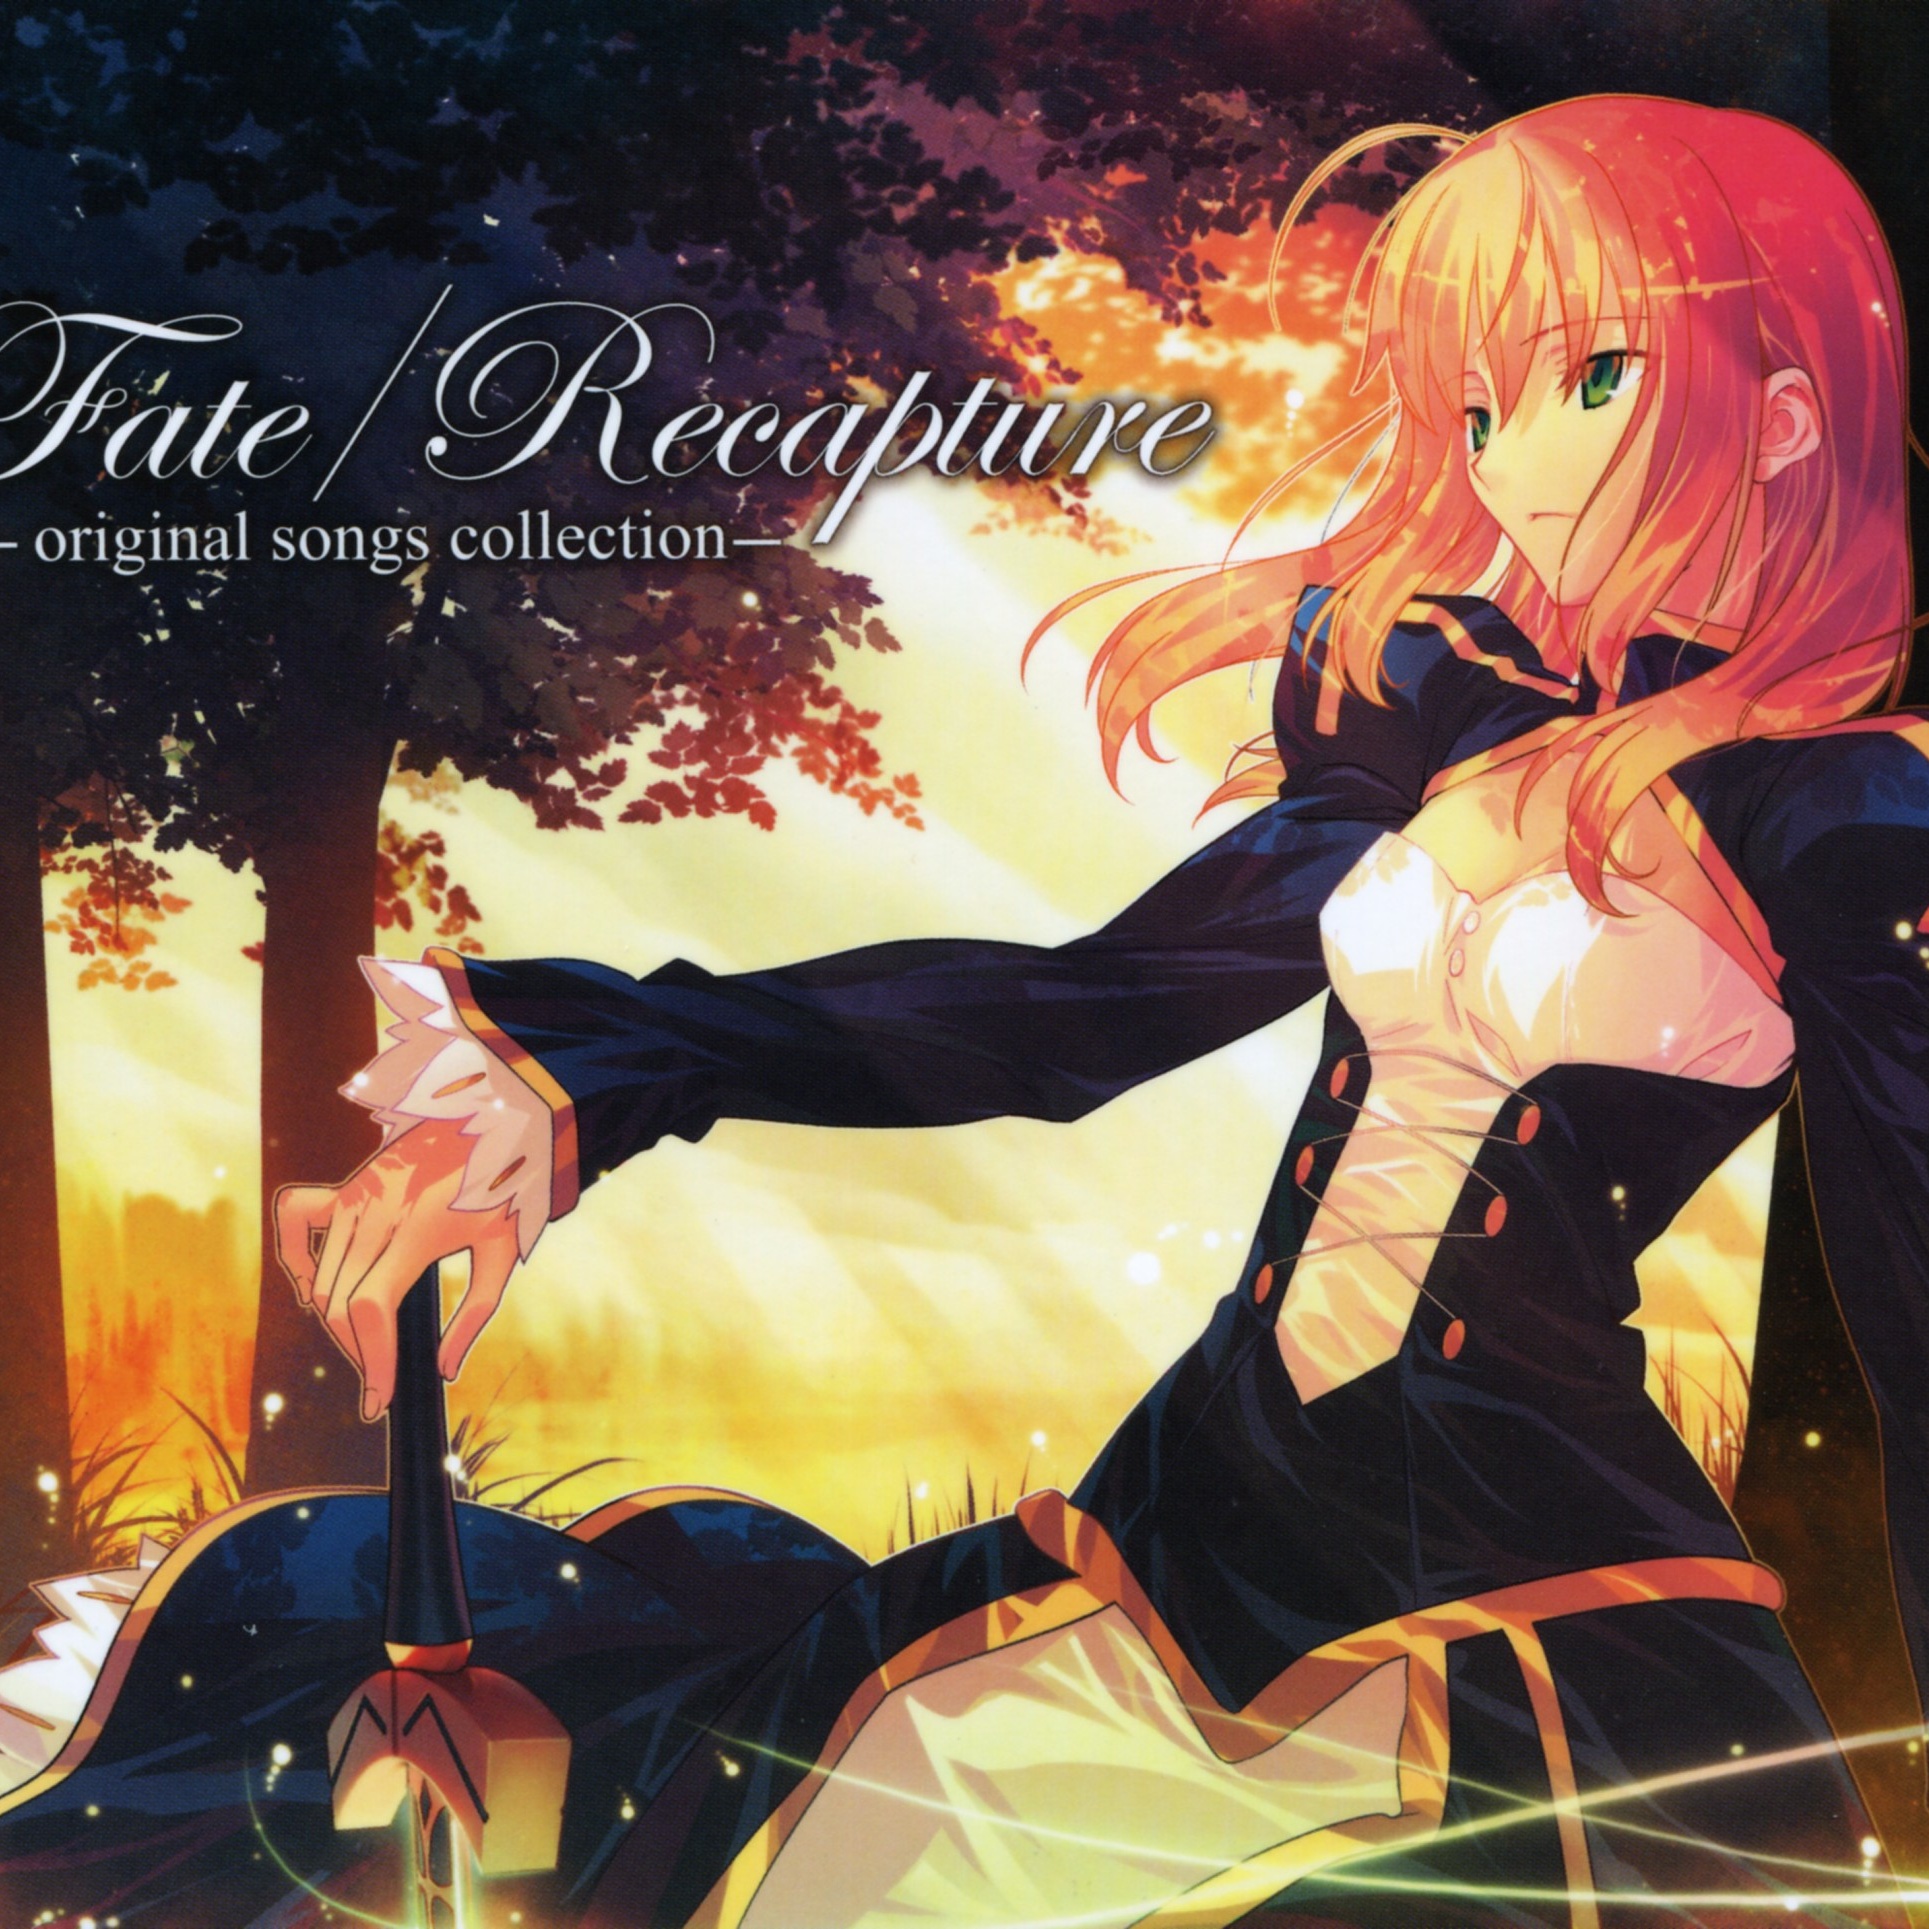 Fate/Recapture -original songs collection